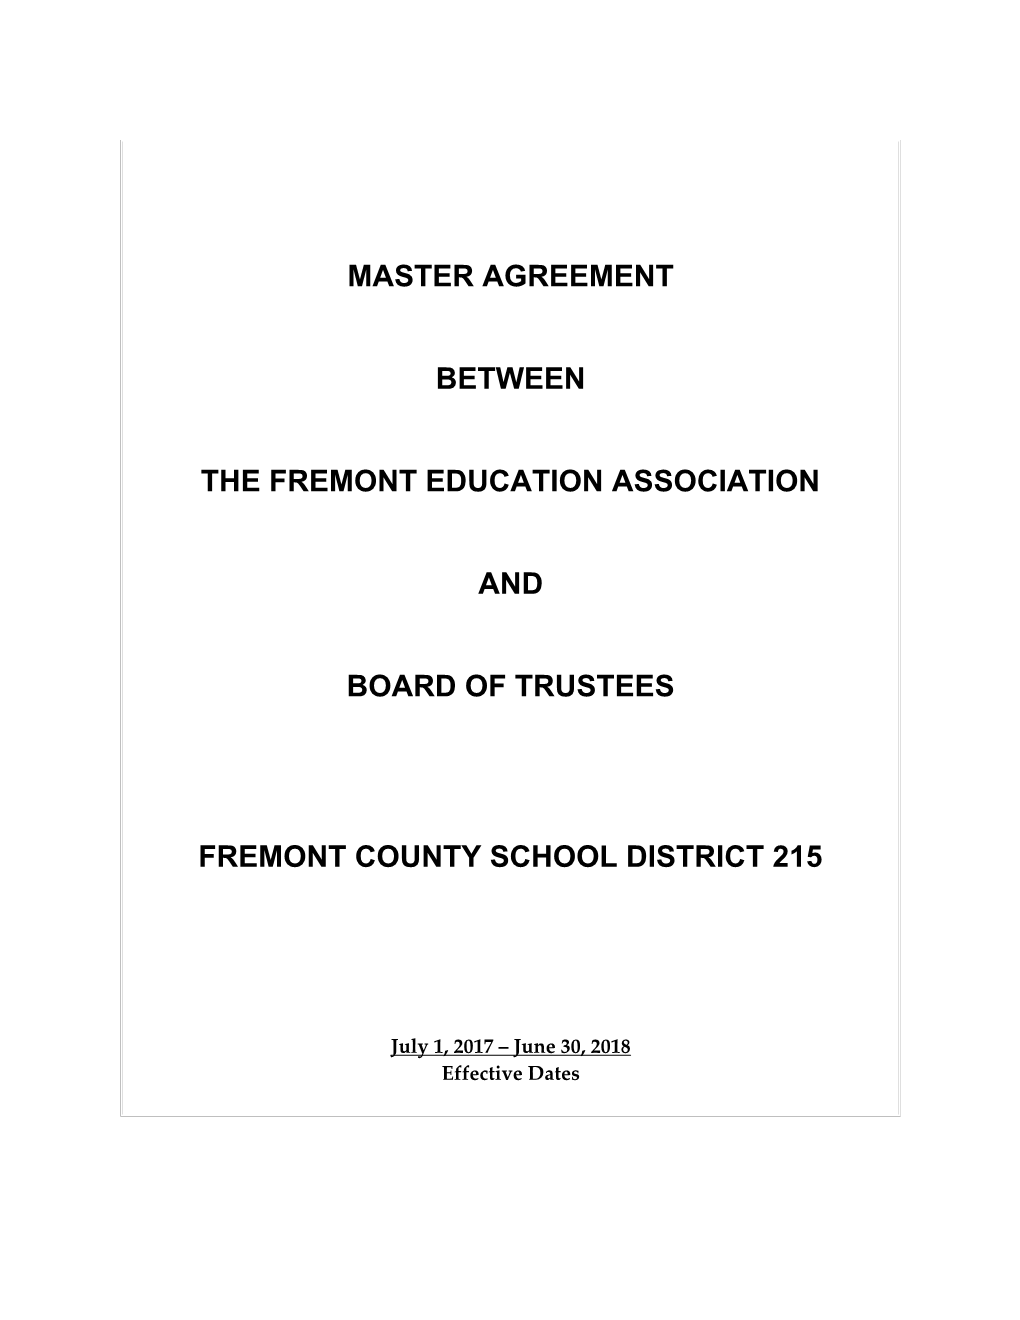 The Fremont Education Association